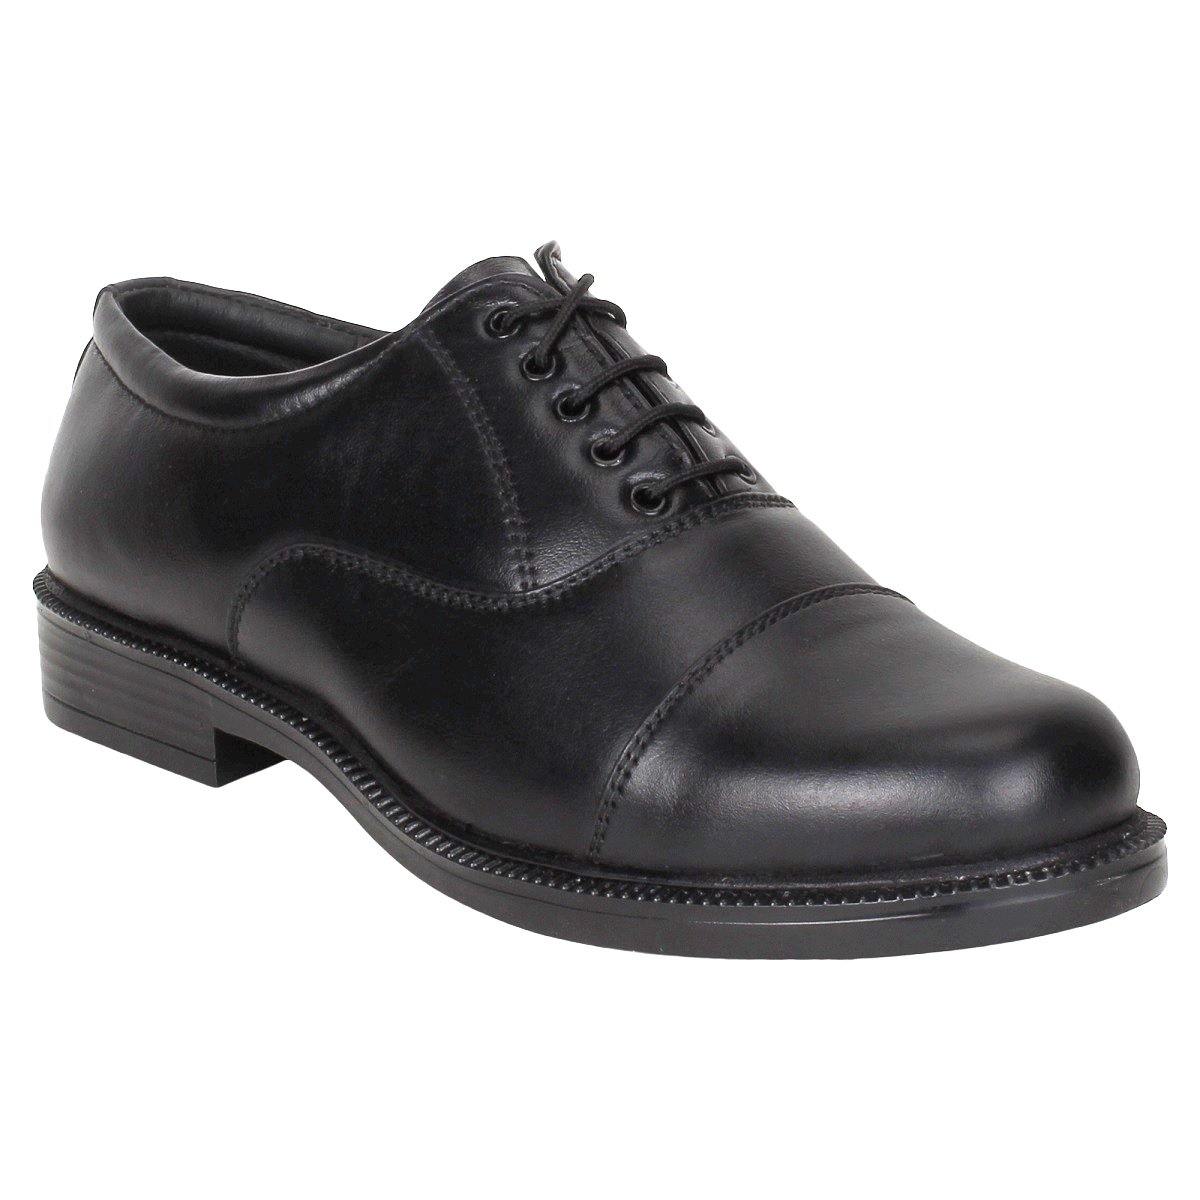 Police Shoes for Men - SeeandWear